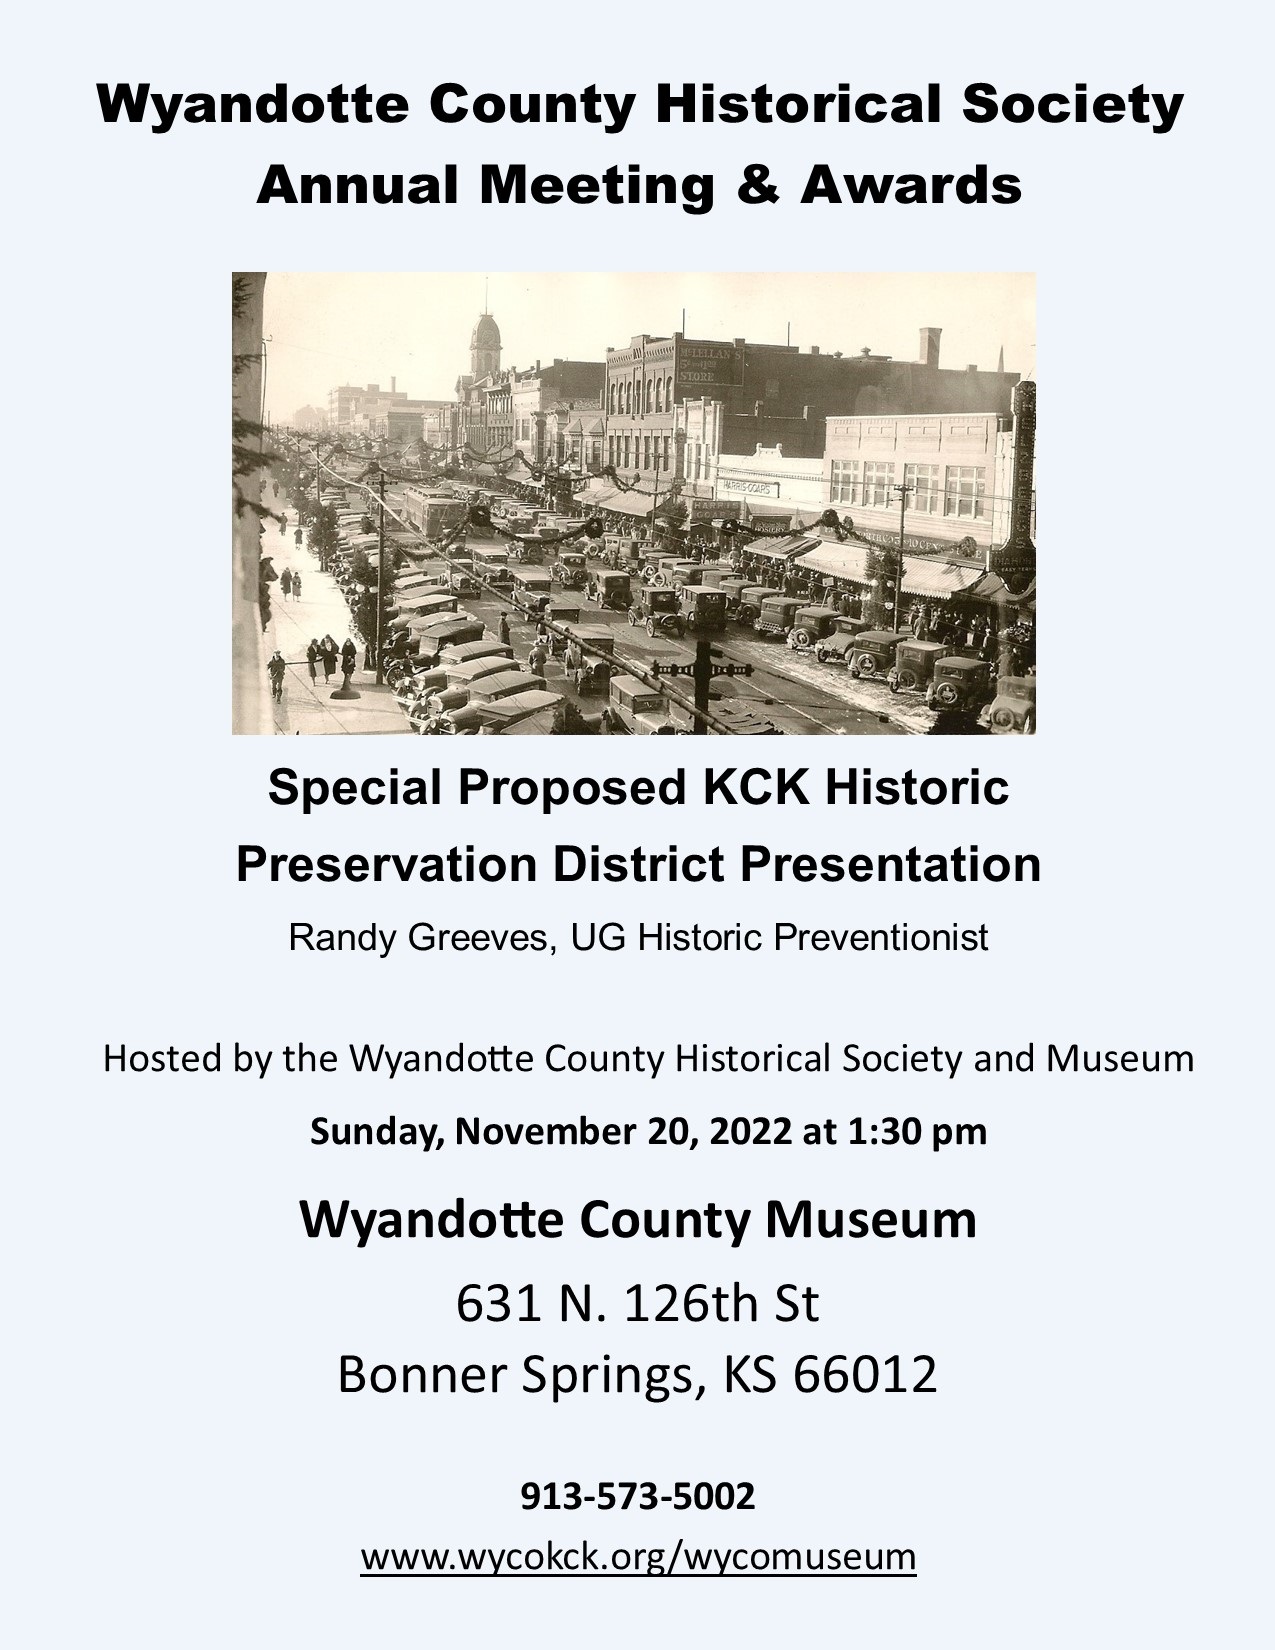 WYCO Historical SocietyAnnual Meeting November 20th at 1:30 pm